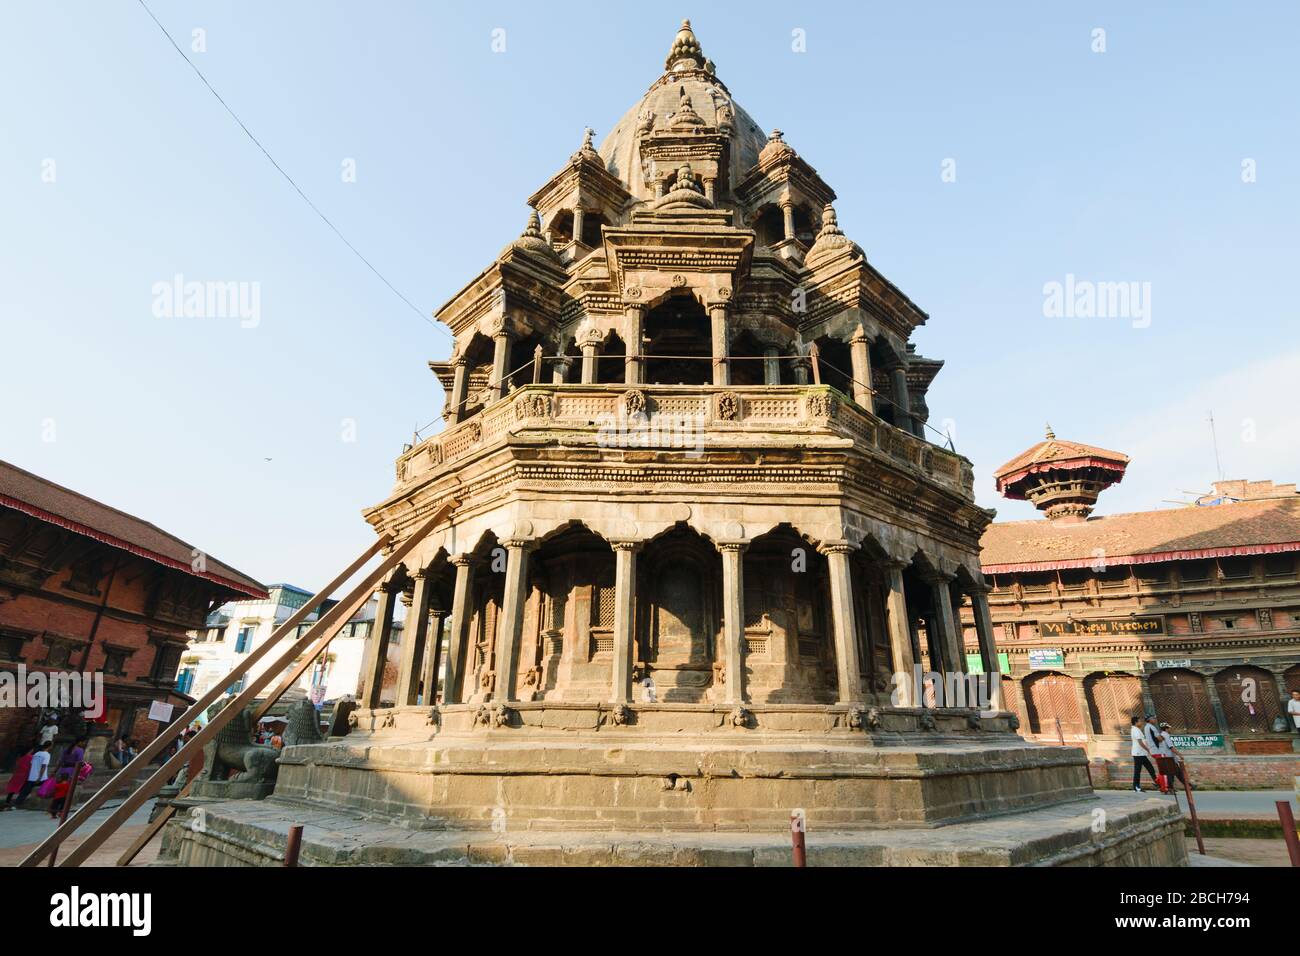 PATAN, NEPAL - 29 Jul 2015: Octagonal Krishna temple Chyasin Dega built by Pratap Malla in Patan Durbar Square, Nepal Stock Photo